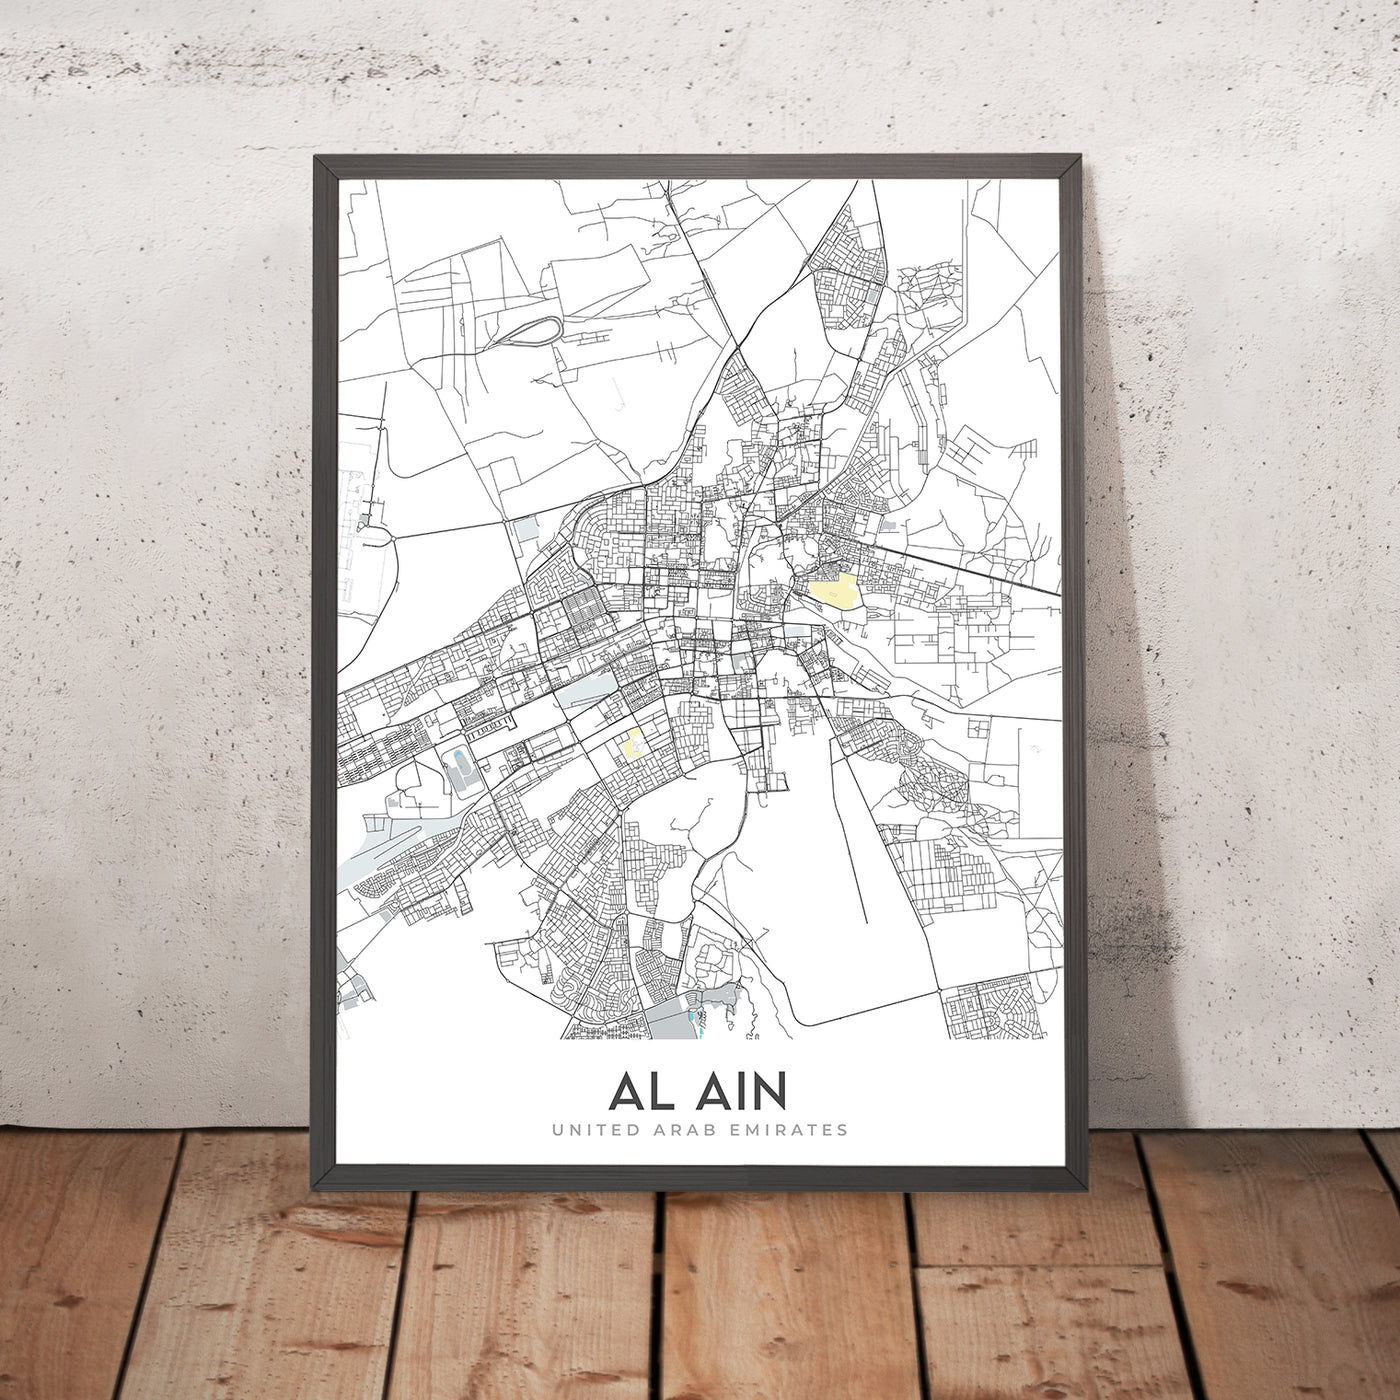 Modern City Map of Al Ain, United Arab Emirates: Oasis, Zoo, National Museum, Bin Zayed St, Bin Sultan St